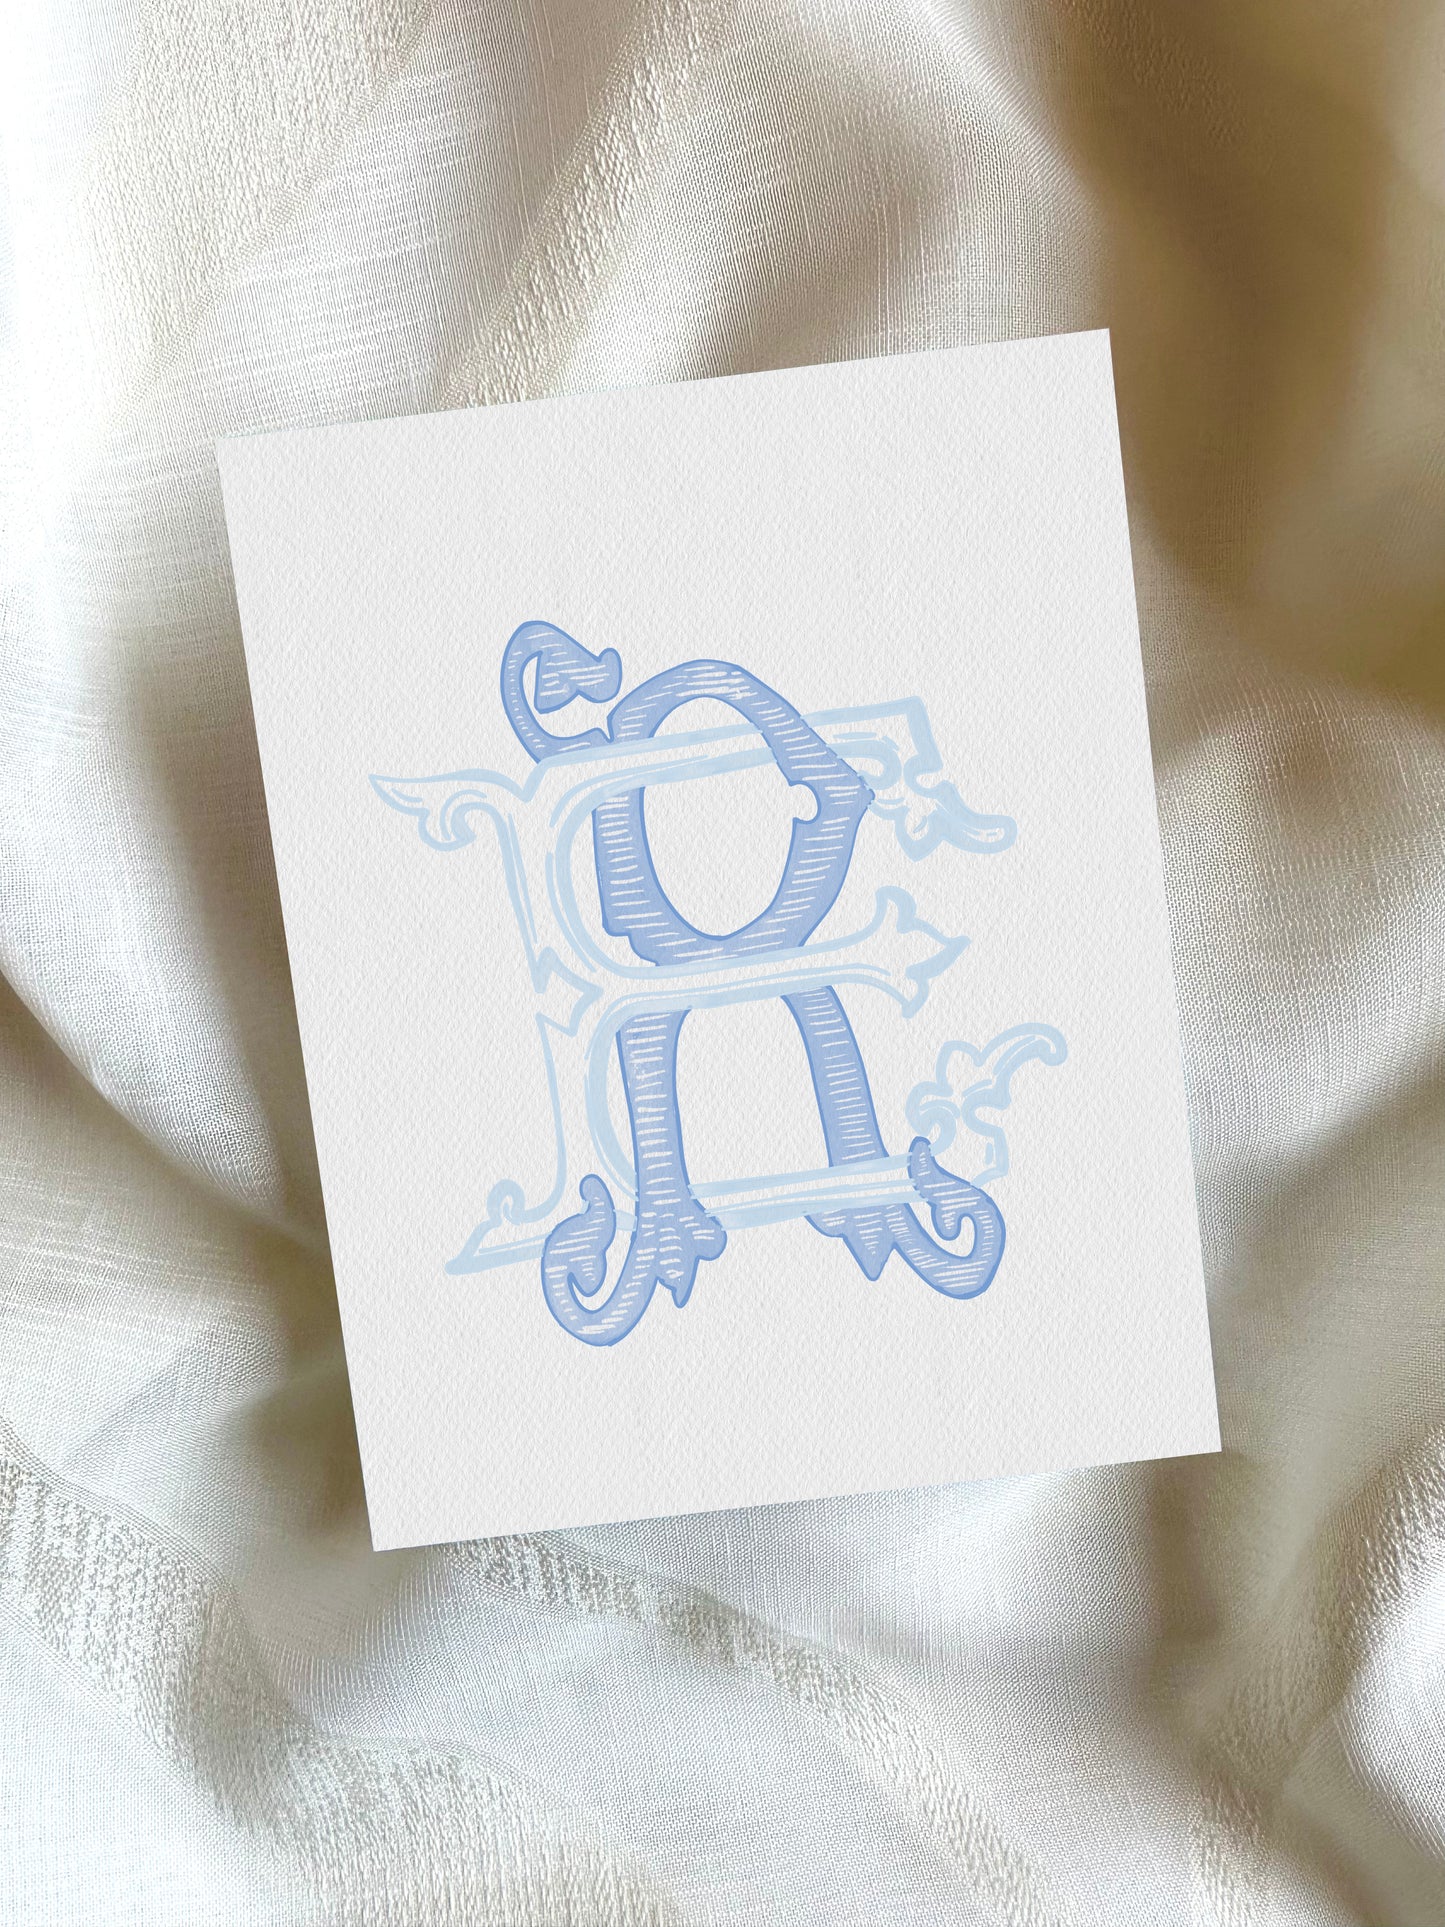 2 Letter Monogram with Letters ER| Digital Download - Wedding Monogram SVG, Personal Logo, Wedding Logo for Wedding Invitations The Wedding Crest Lab